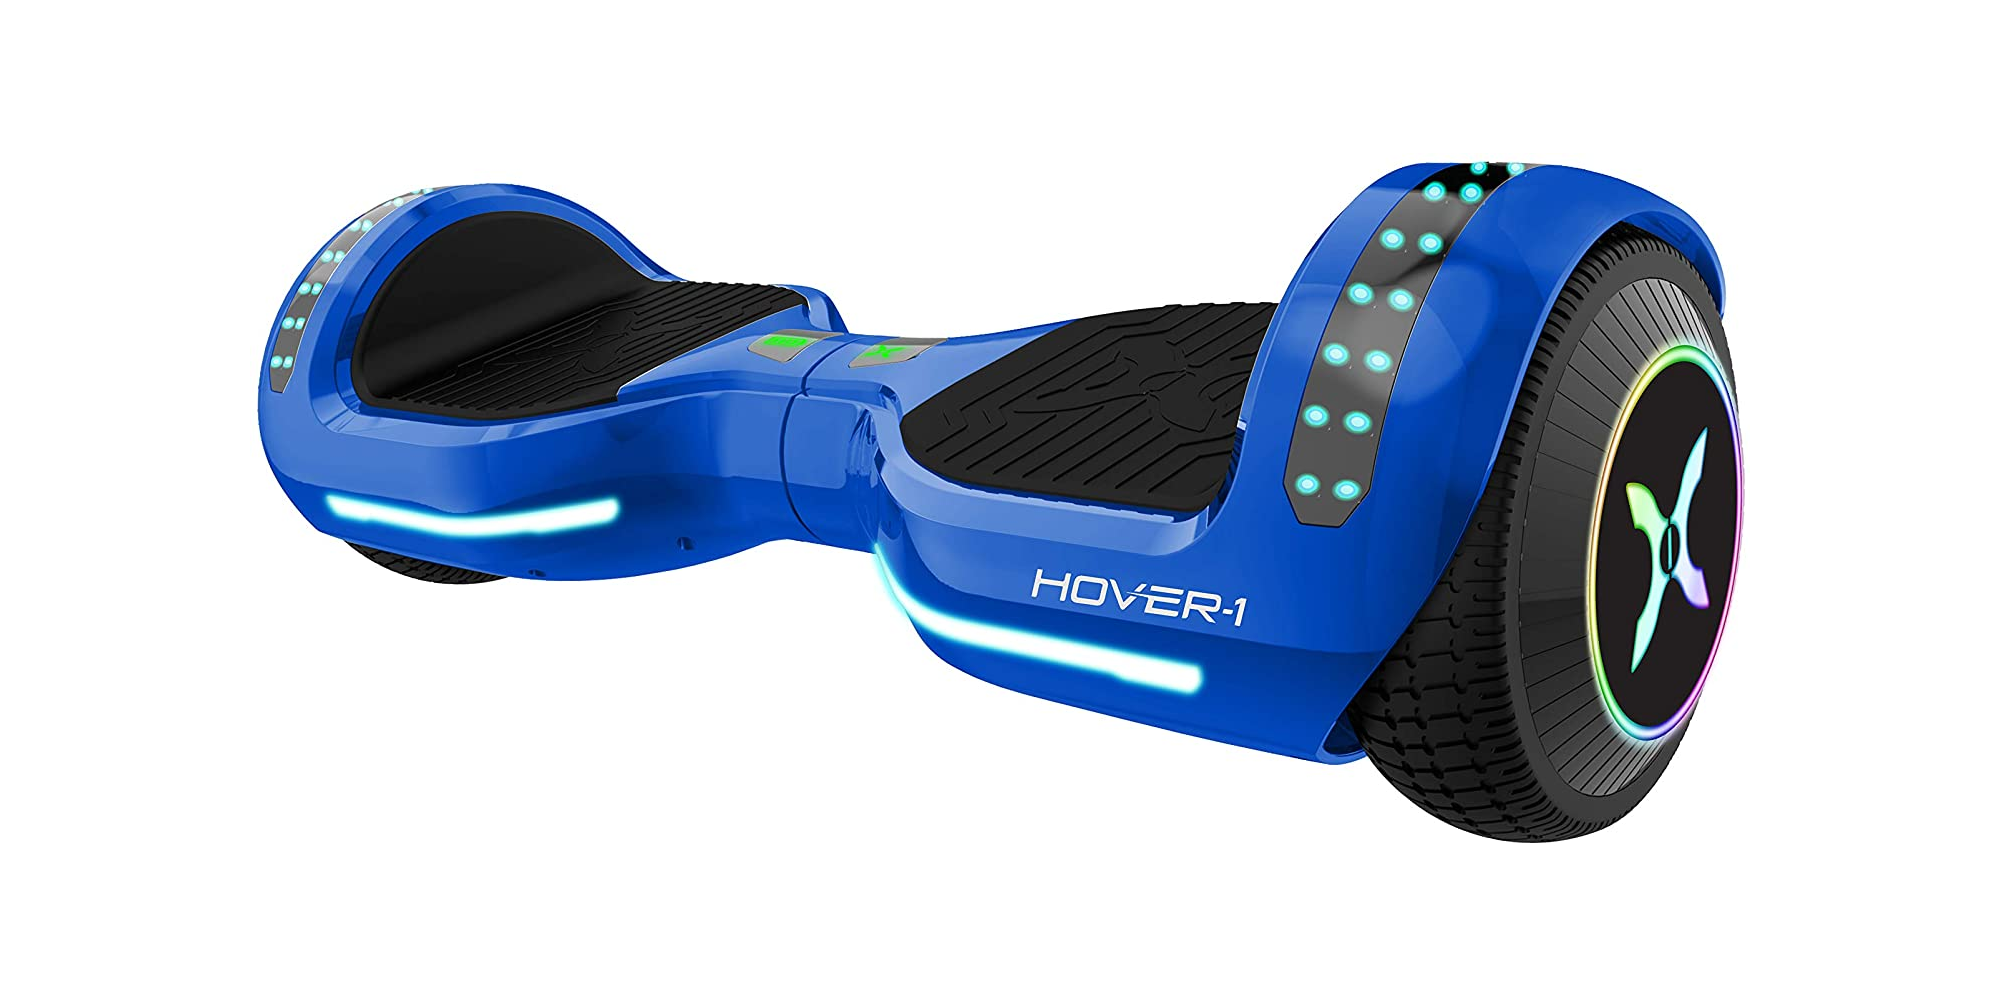 https://electrek.co/wp-content/uploads/sites/3/2021/06/hover-1-origin-hoverboard.png